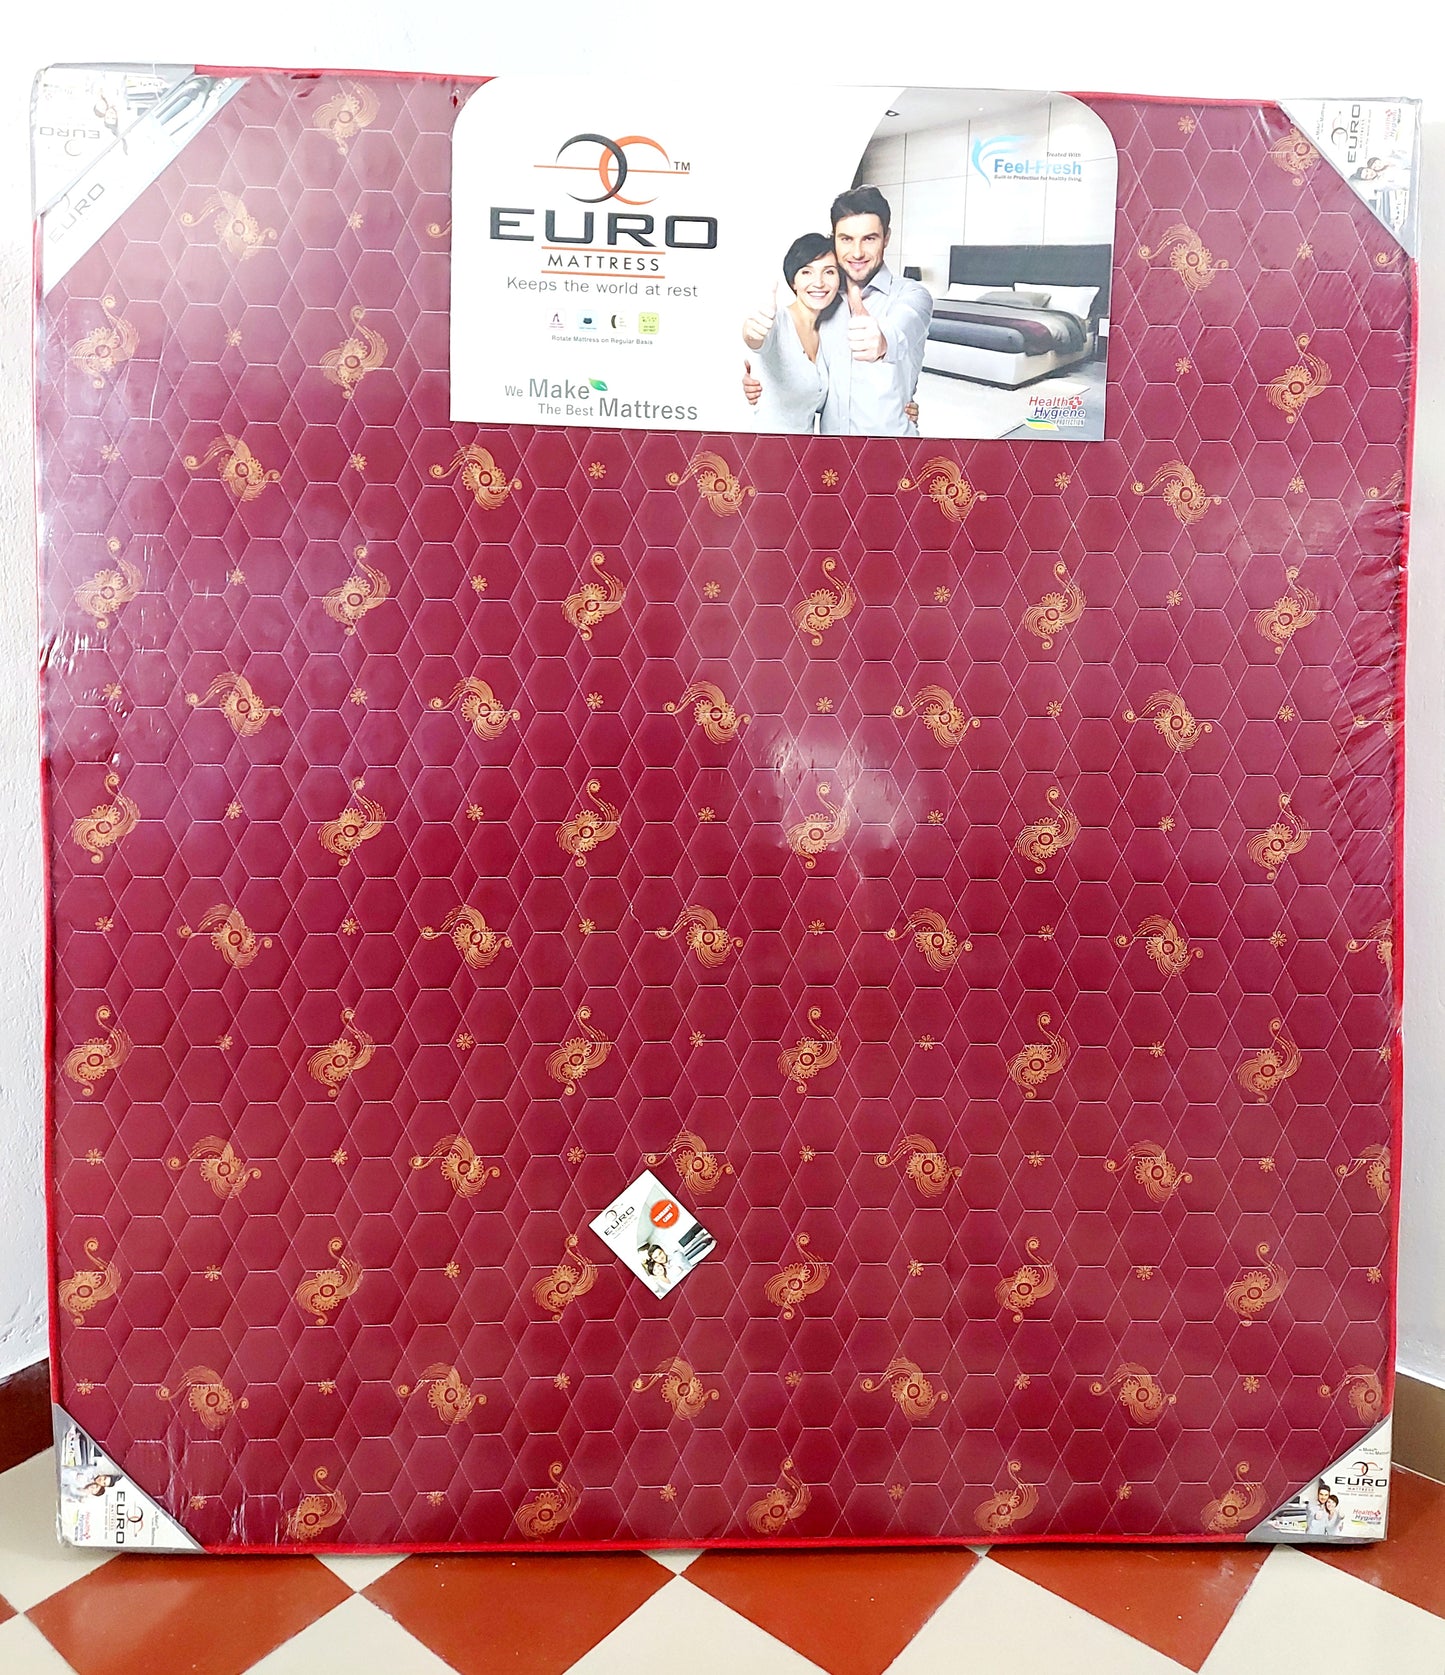 Euro Popular 5 Inch Mattress King Size 72X78 Inch 6X6.5 Feet 3 Years Warranty